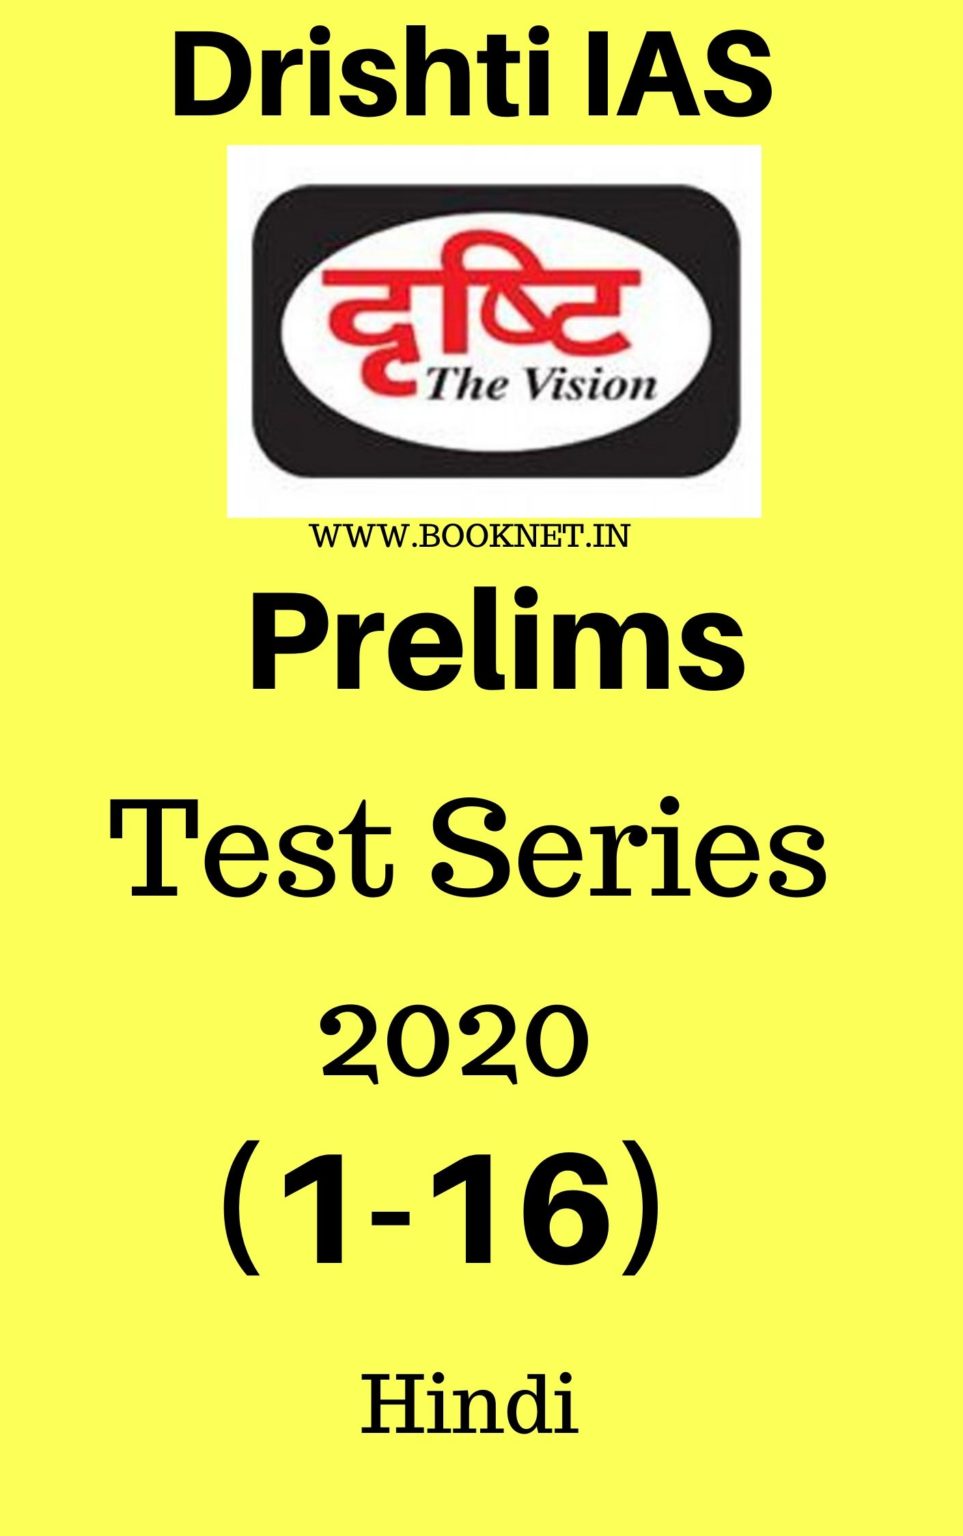 drishti-ias-prelims-test-series-2020-in-hindi-ias-study-material-booknet